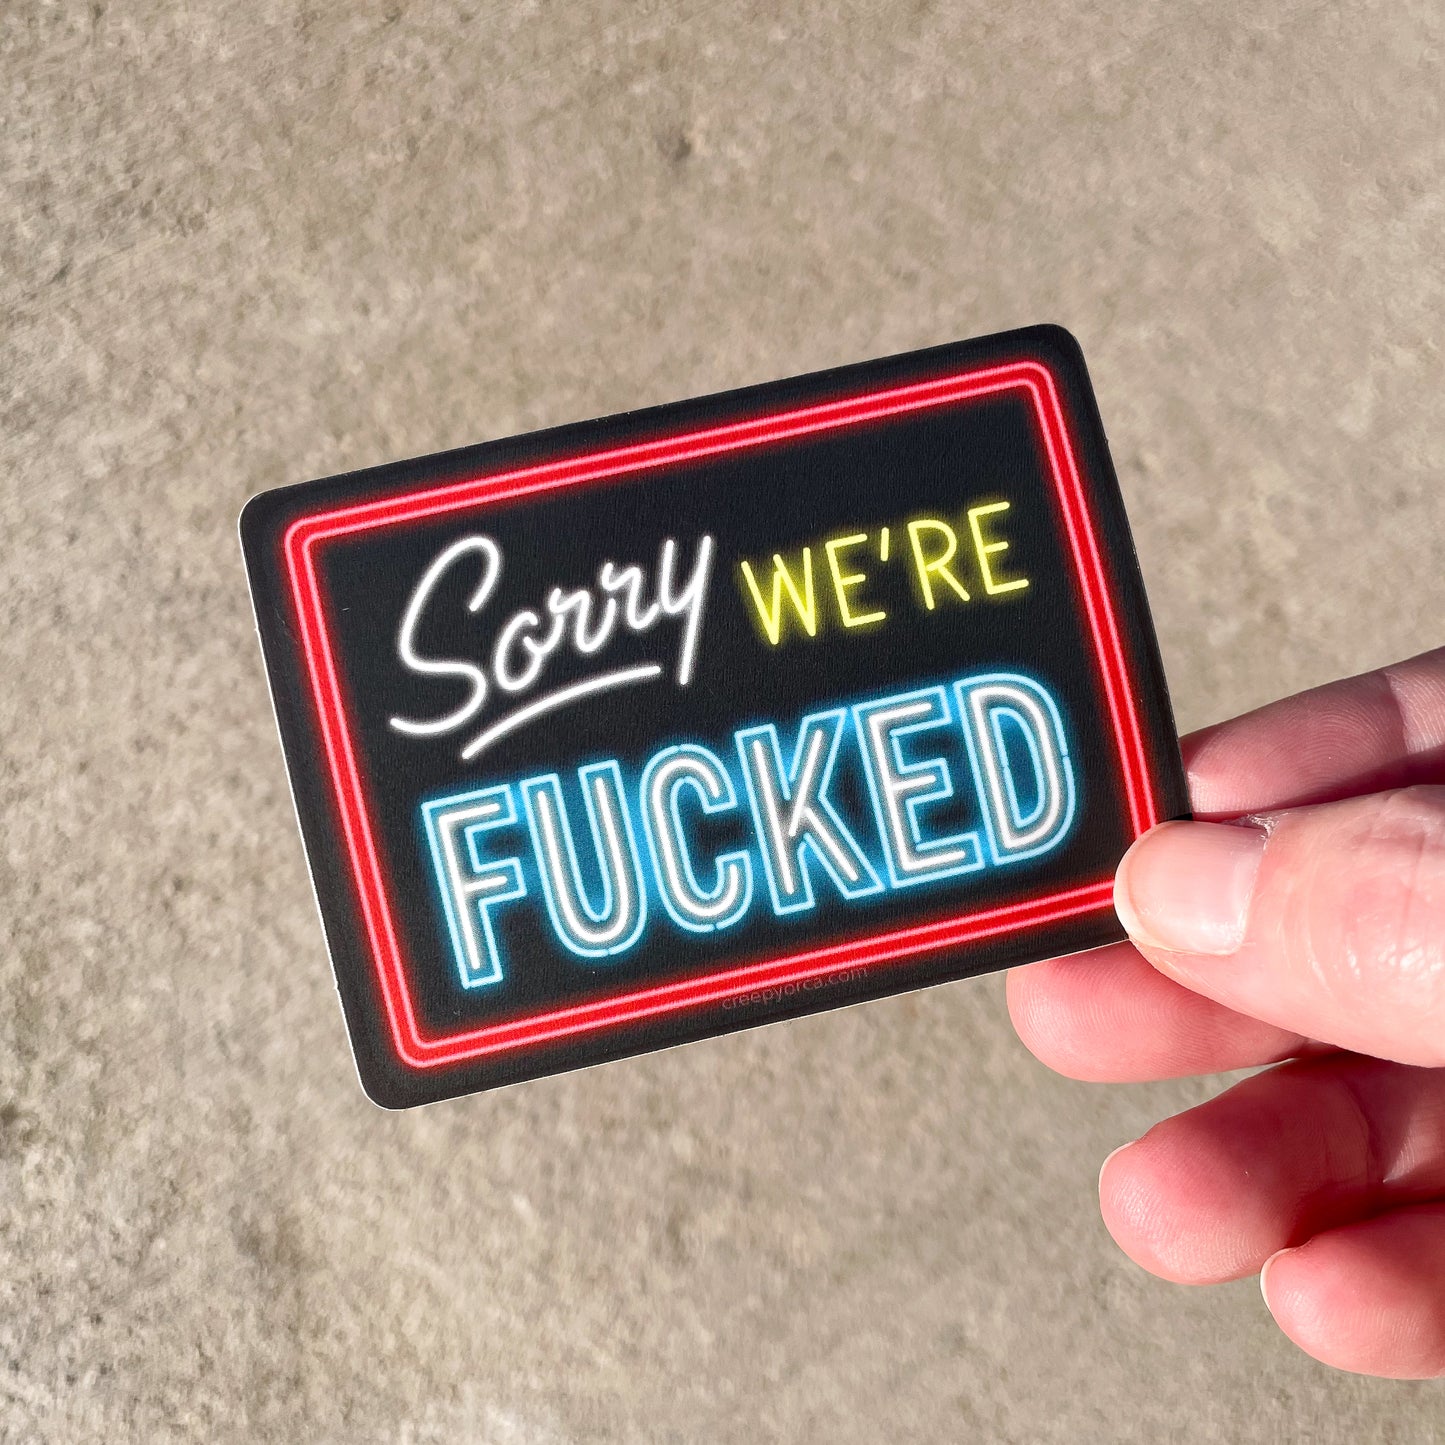 Sorry, We're Fucked Sticker